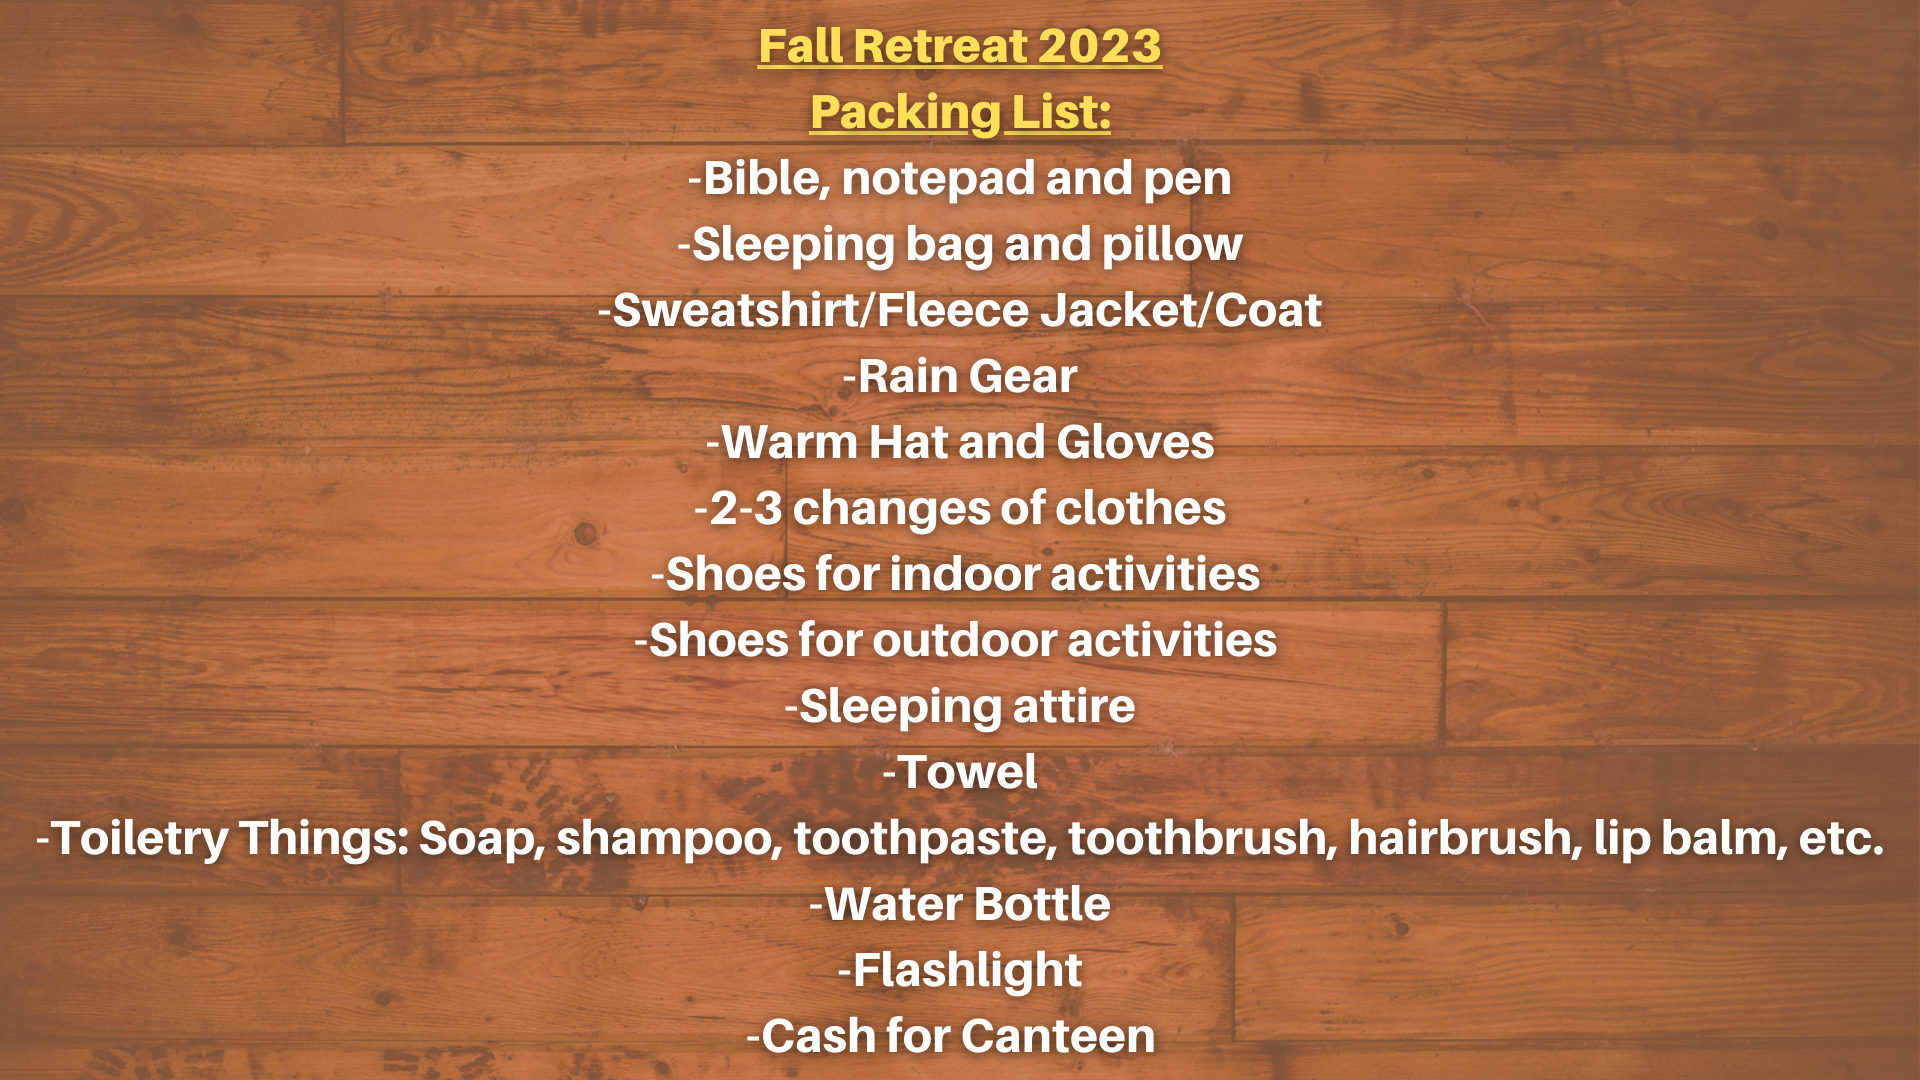 Fall Retreat Packing List 2023